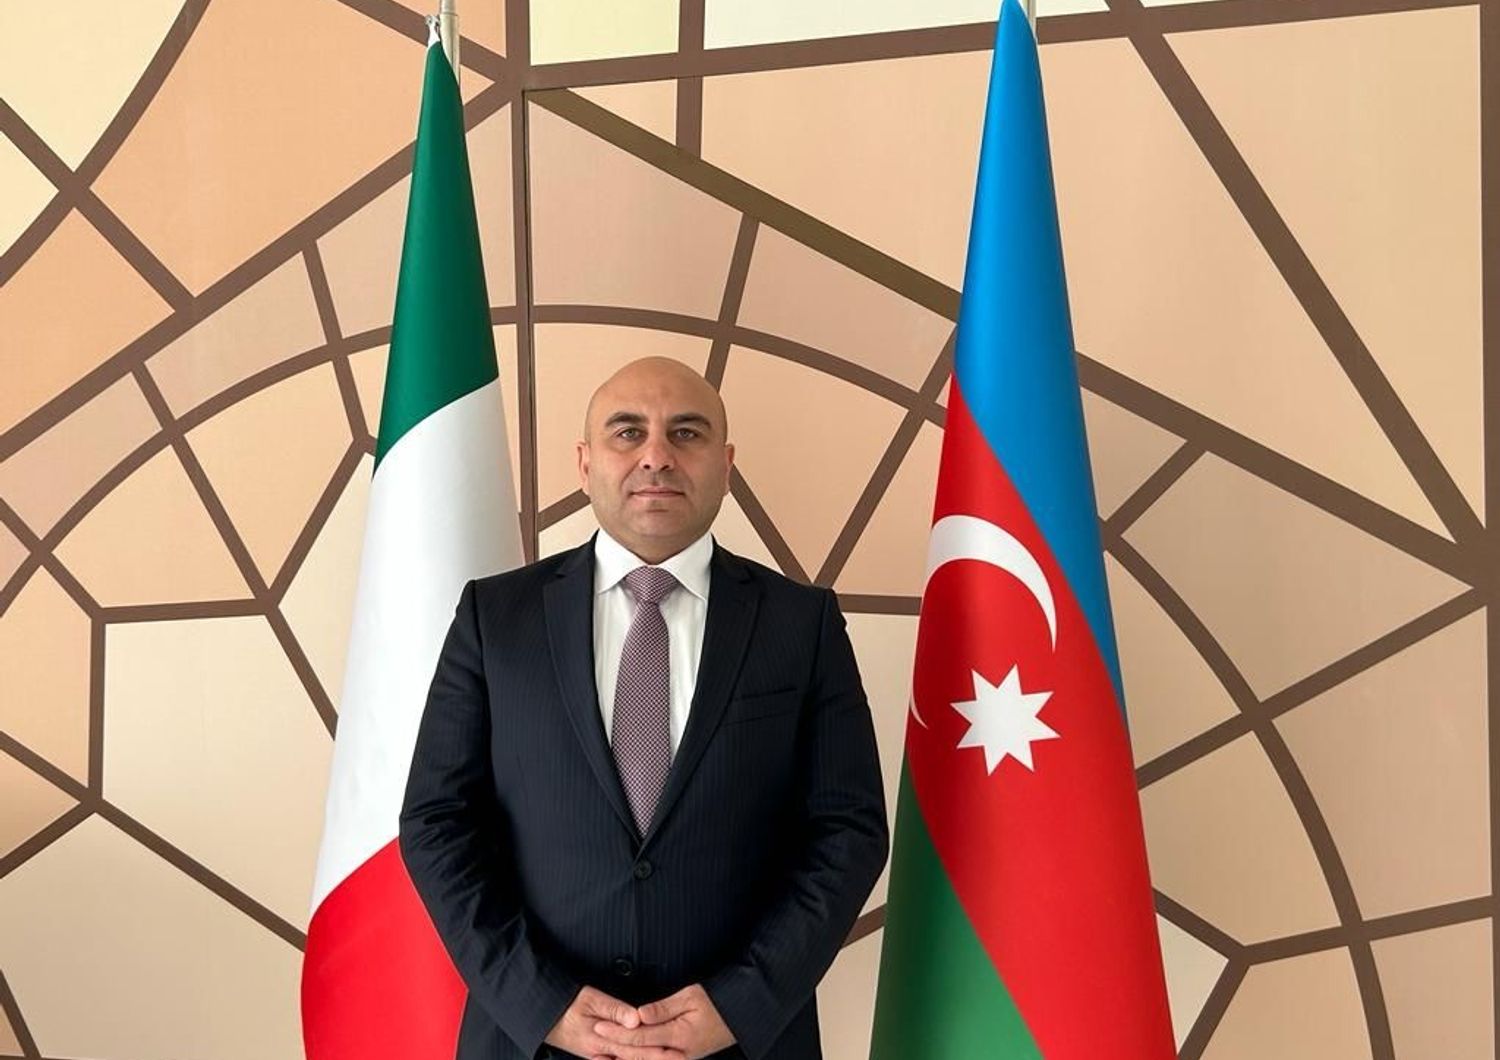 ambasciatore aslanov amernia azerbaigia karabakh diritto eliminare zone grigie